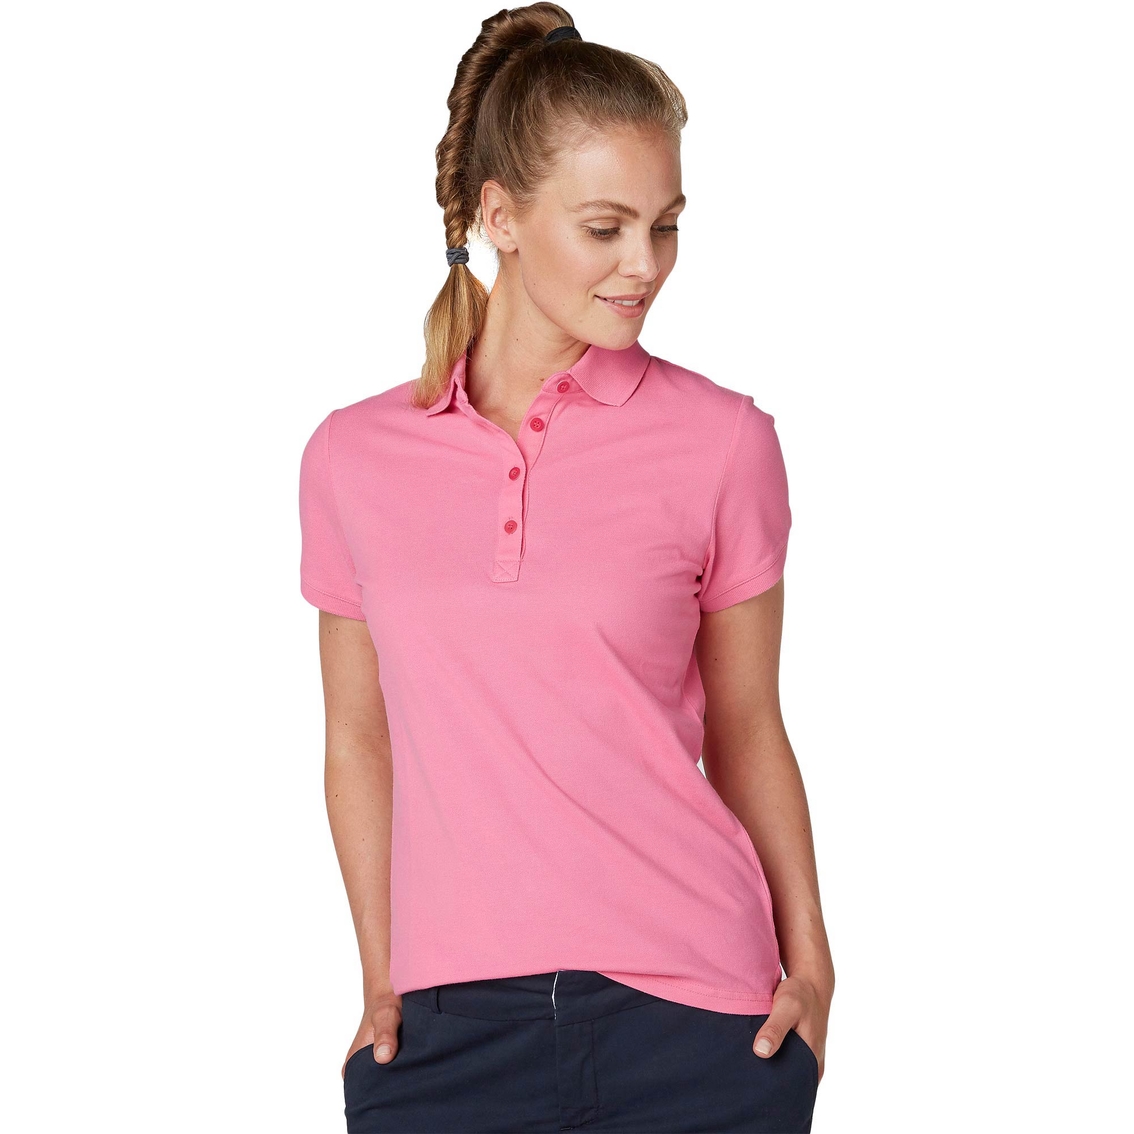 Helly Hansen Crew Pique 2 Polo Shirt | Tops | Clothing & Accessories ...